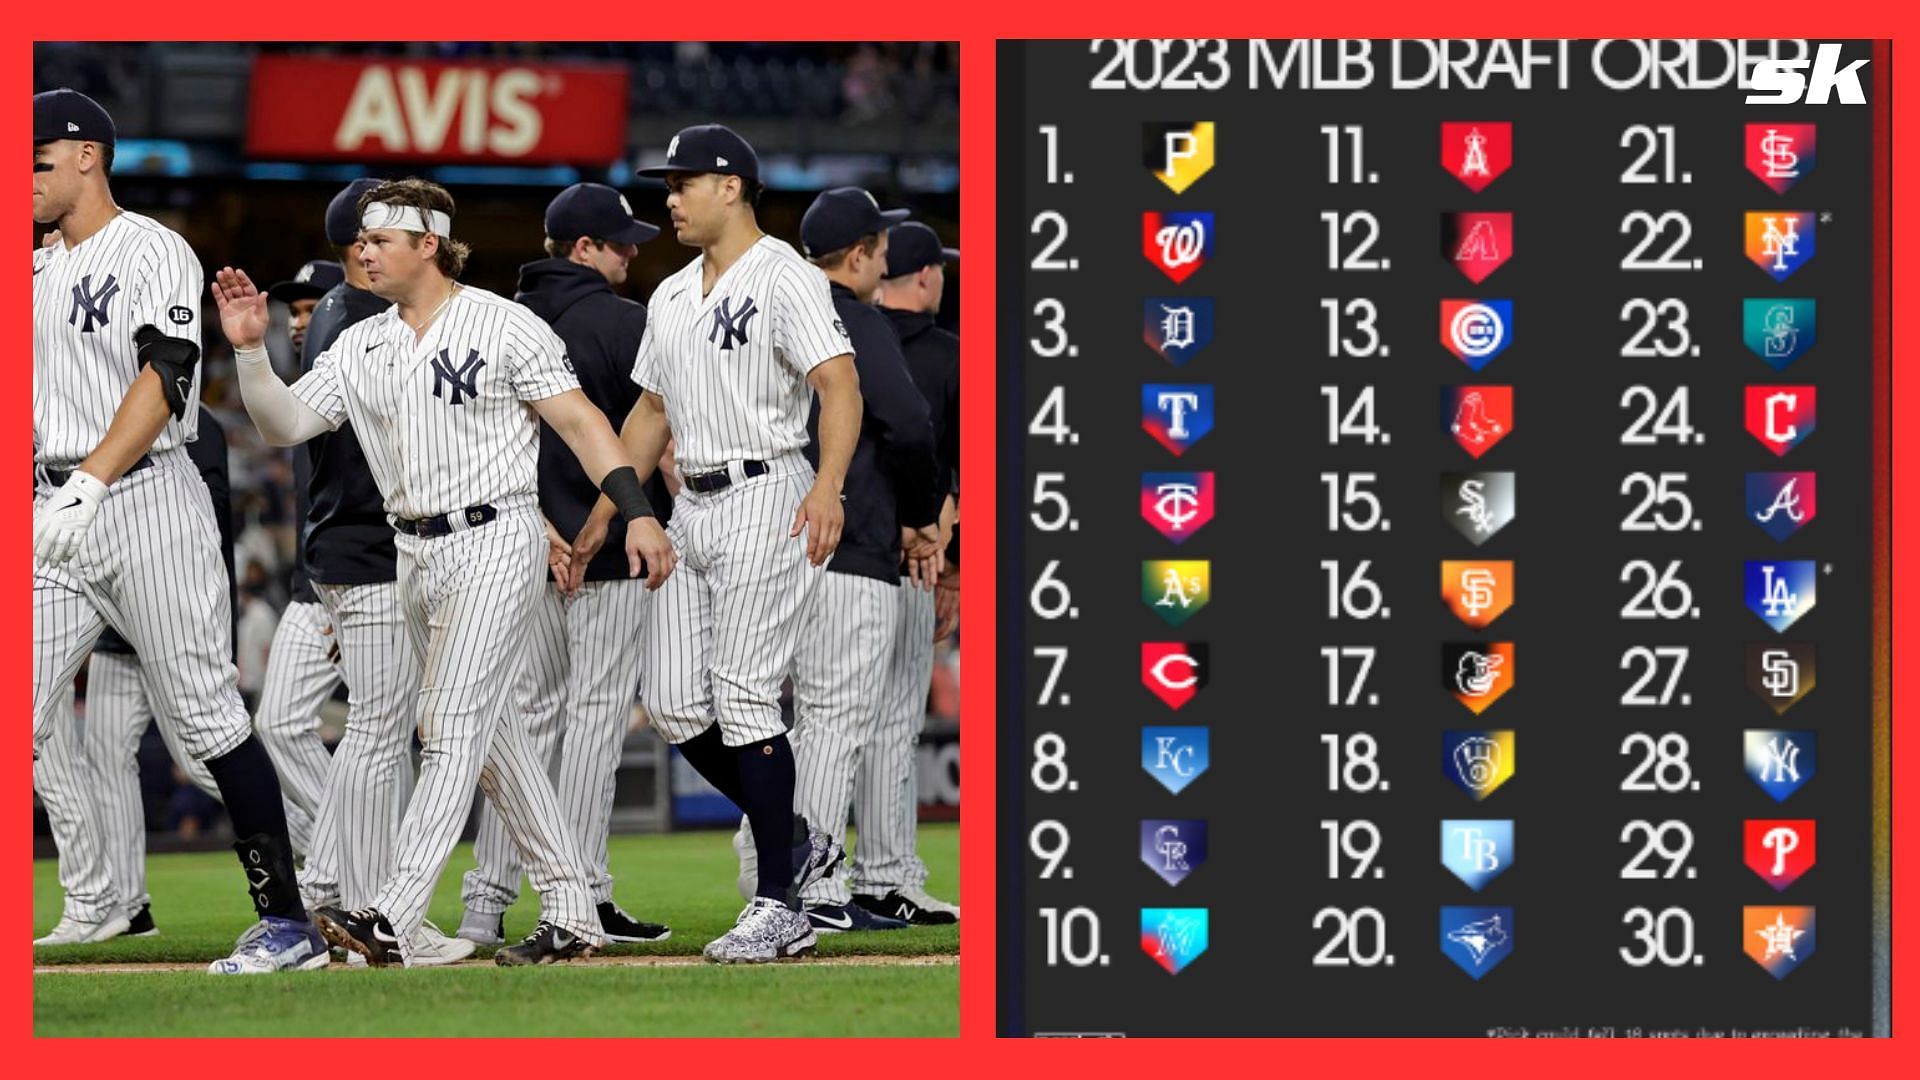 MLB Draft 2023 What is Yankees Bonus Pool Allotment And Pick Values?